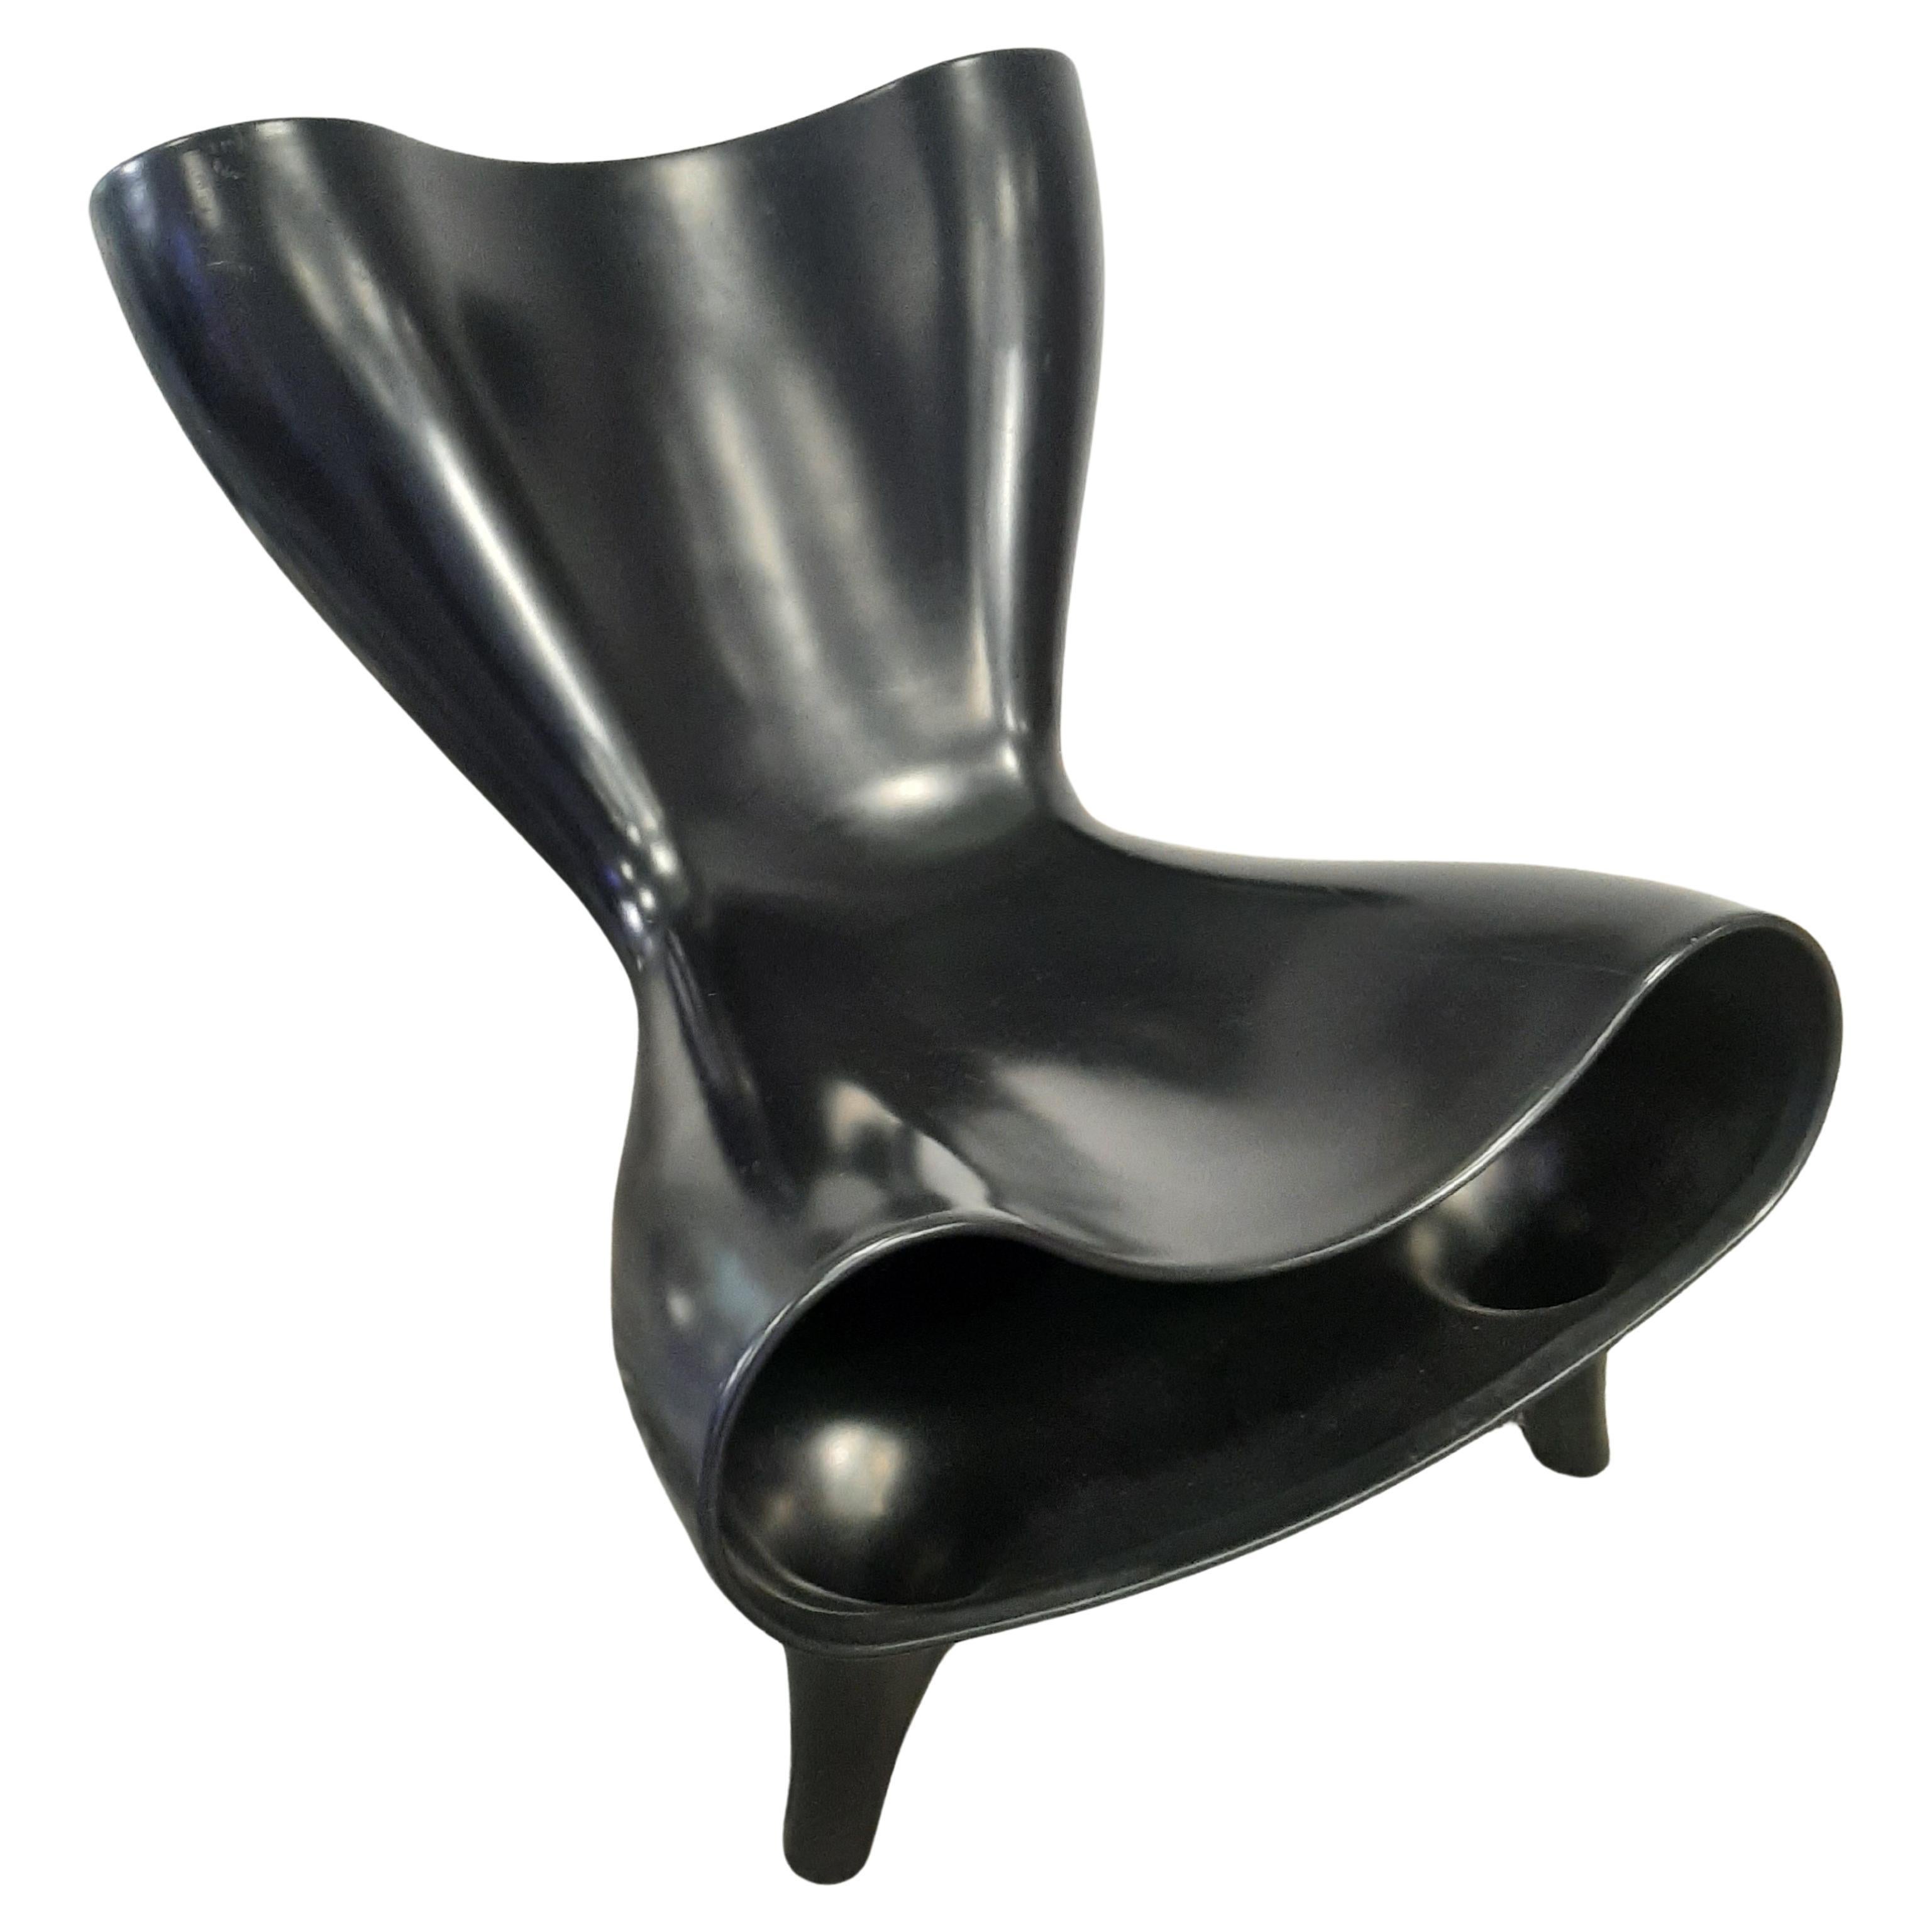 Sessel Modell Orgone hergestellt von Cappellini